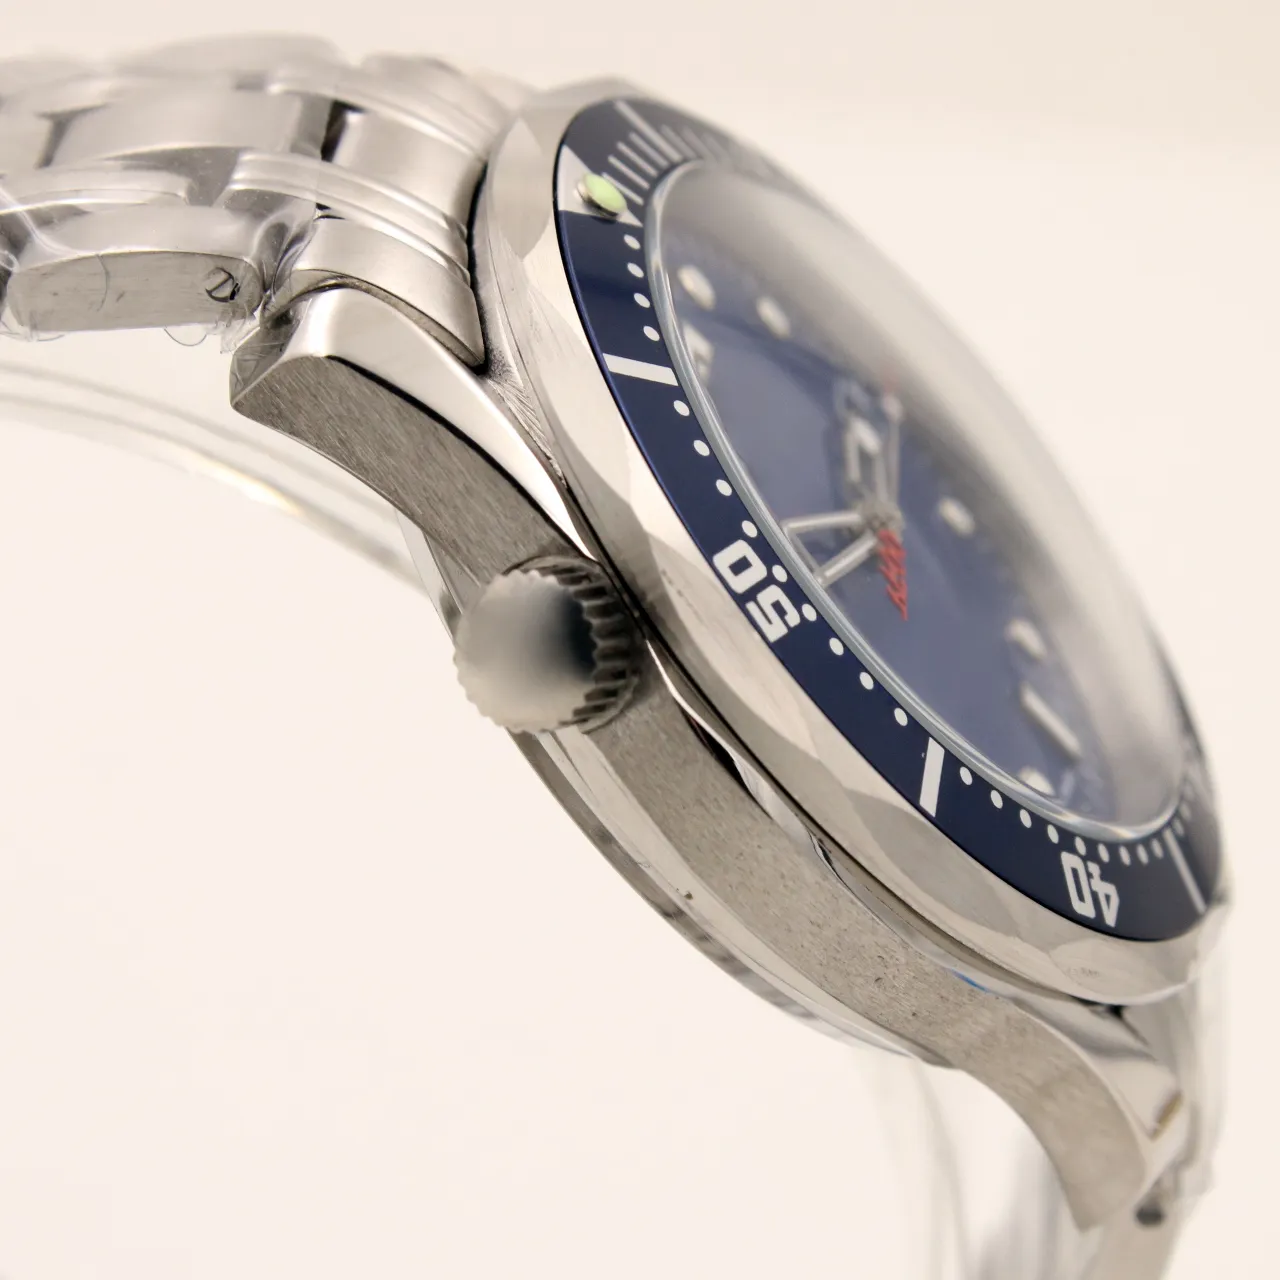 Nuovi uomini meccanici professionali 300m James Bond 007 quadrante blu zaffiro orologio automatico orologi da uomo orologi a carica automatica W306u